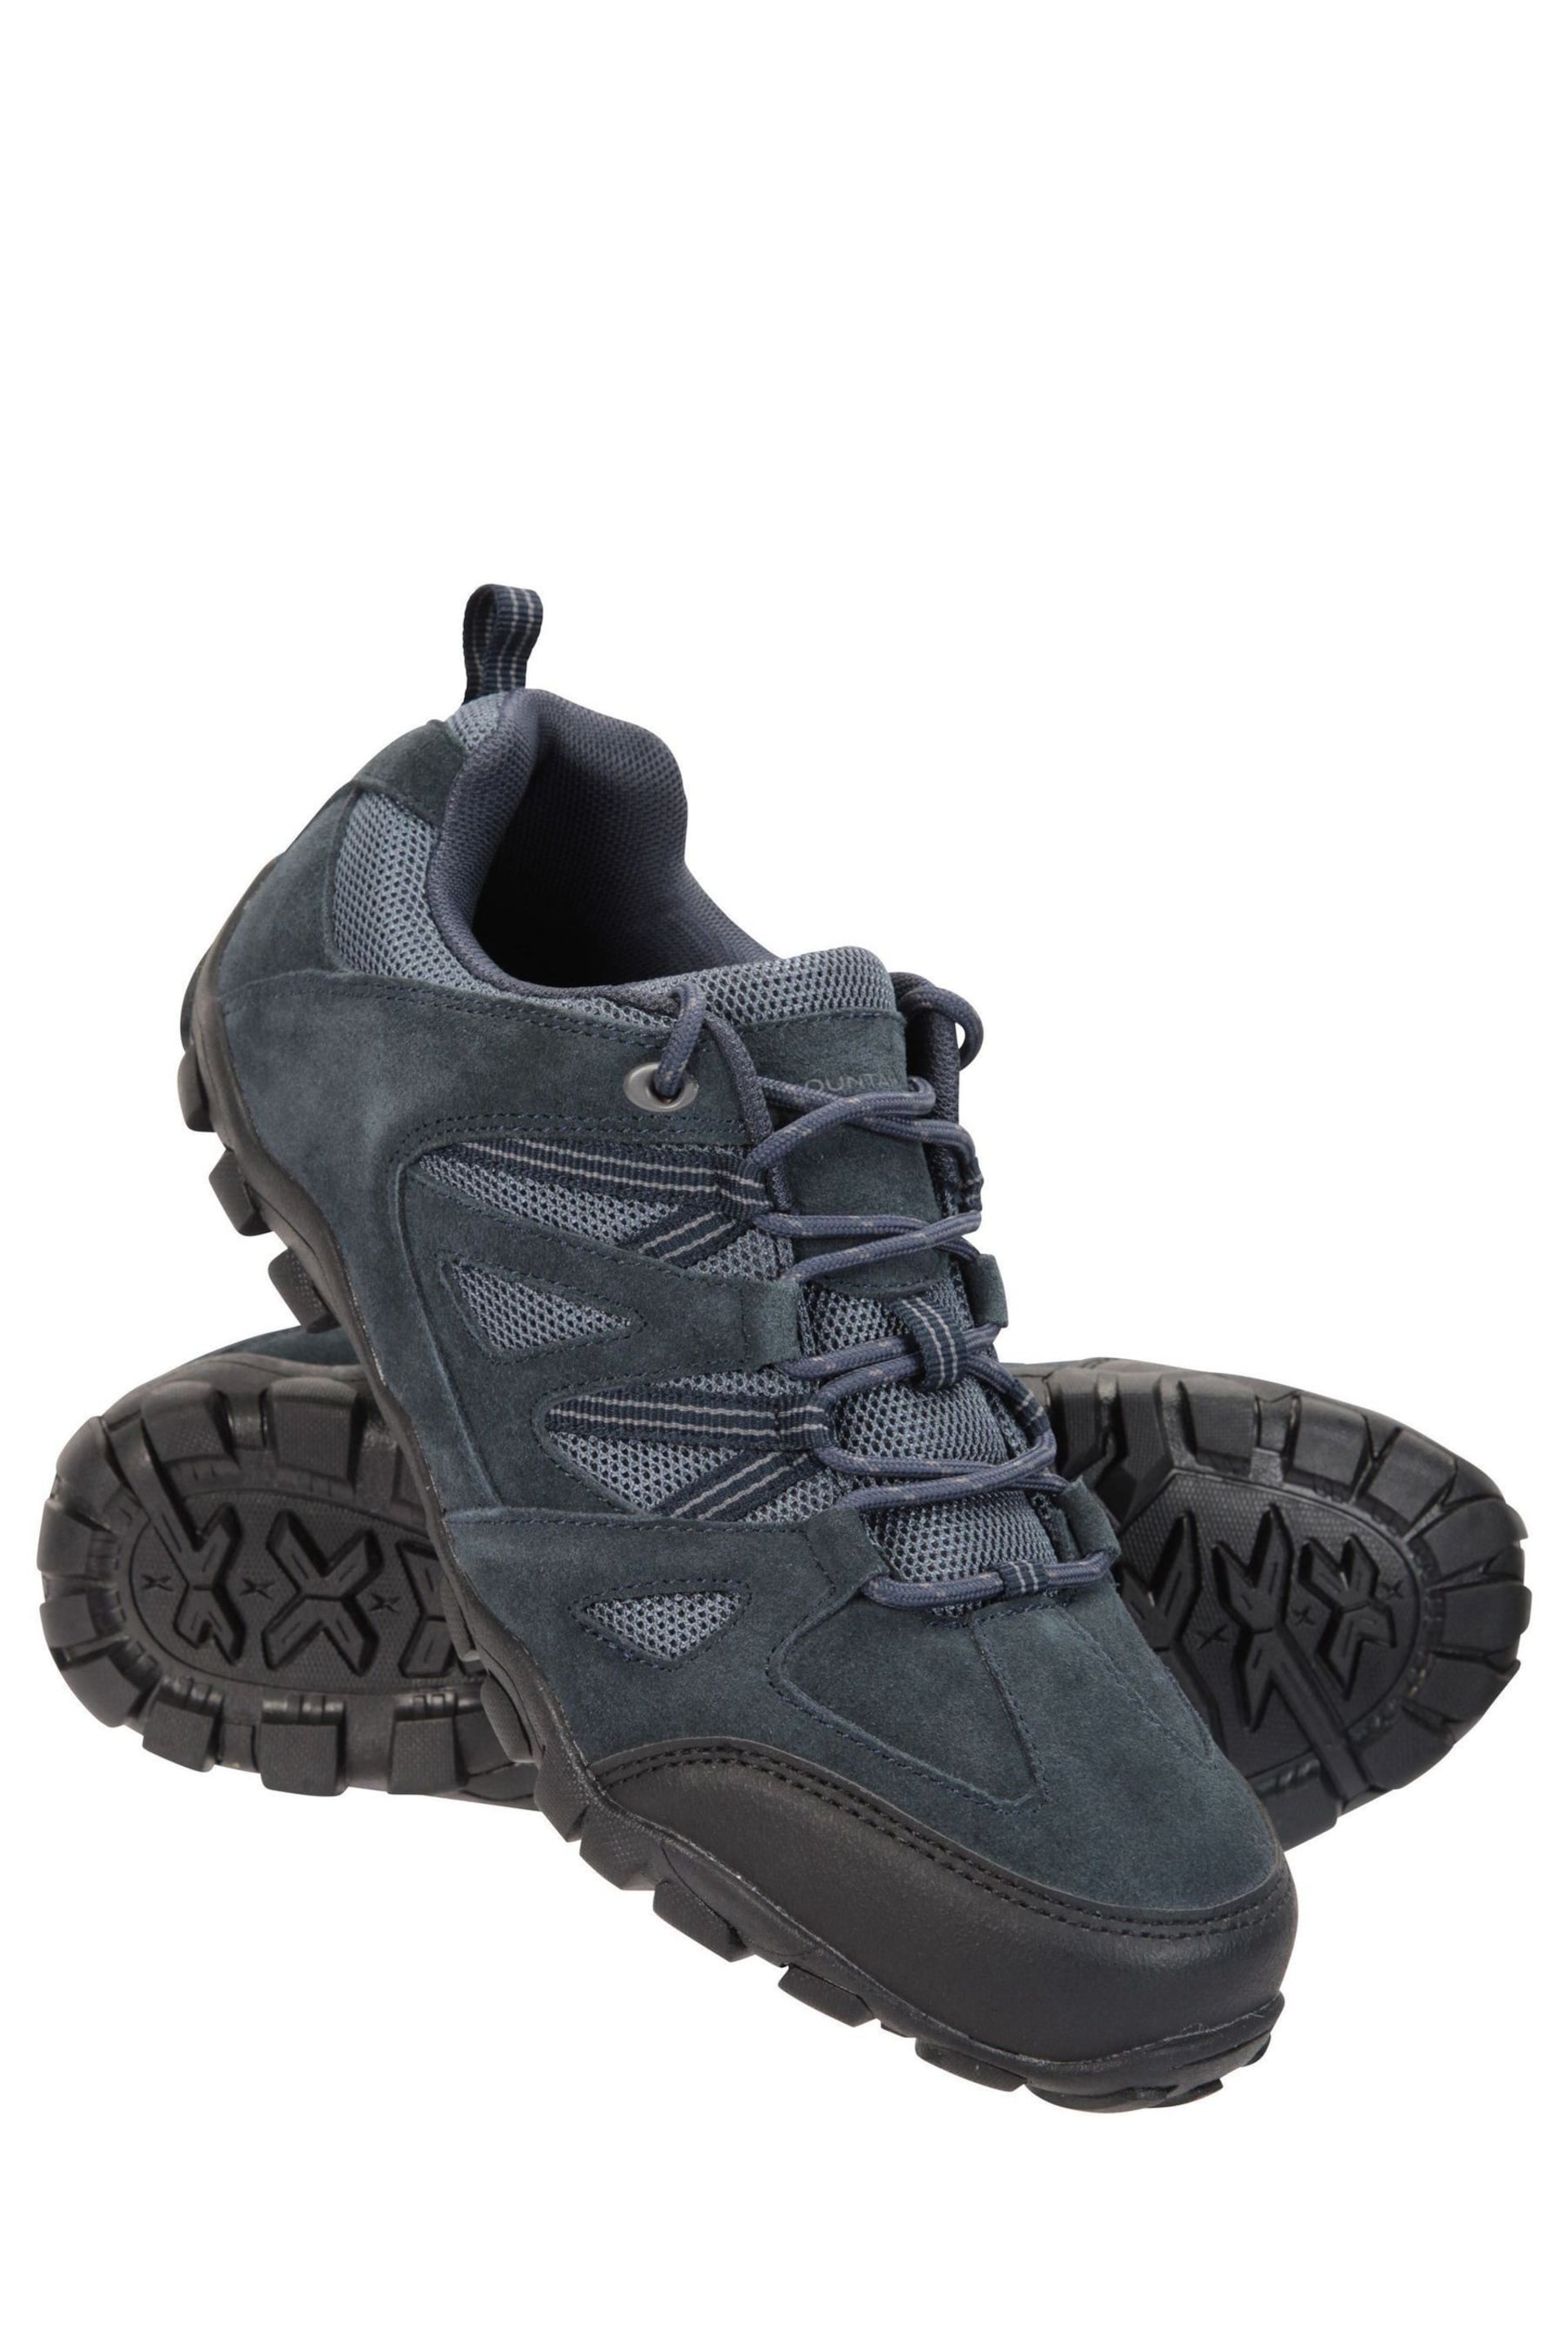 Mountain Warehouse Blue Outdoor III Walking Shoes - Men - Image 2 of 5